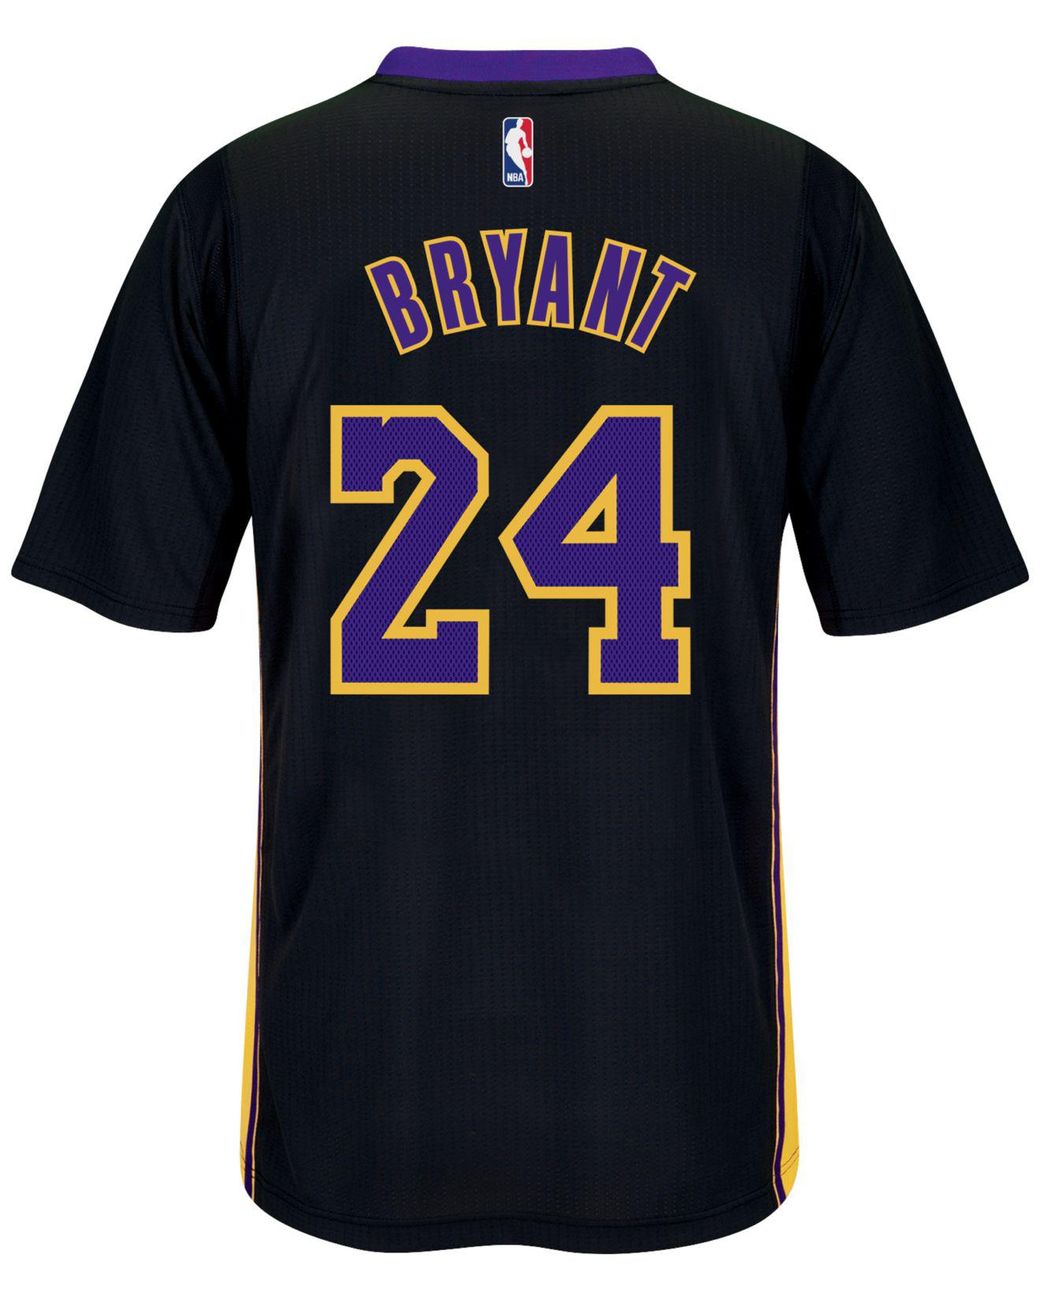 Kobe Bryant Los Angeles Lakers Nike Swingman Jersey White - Association  Edition